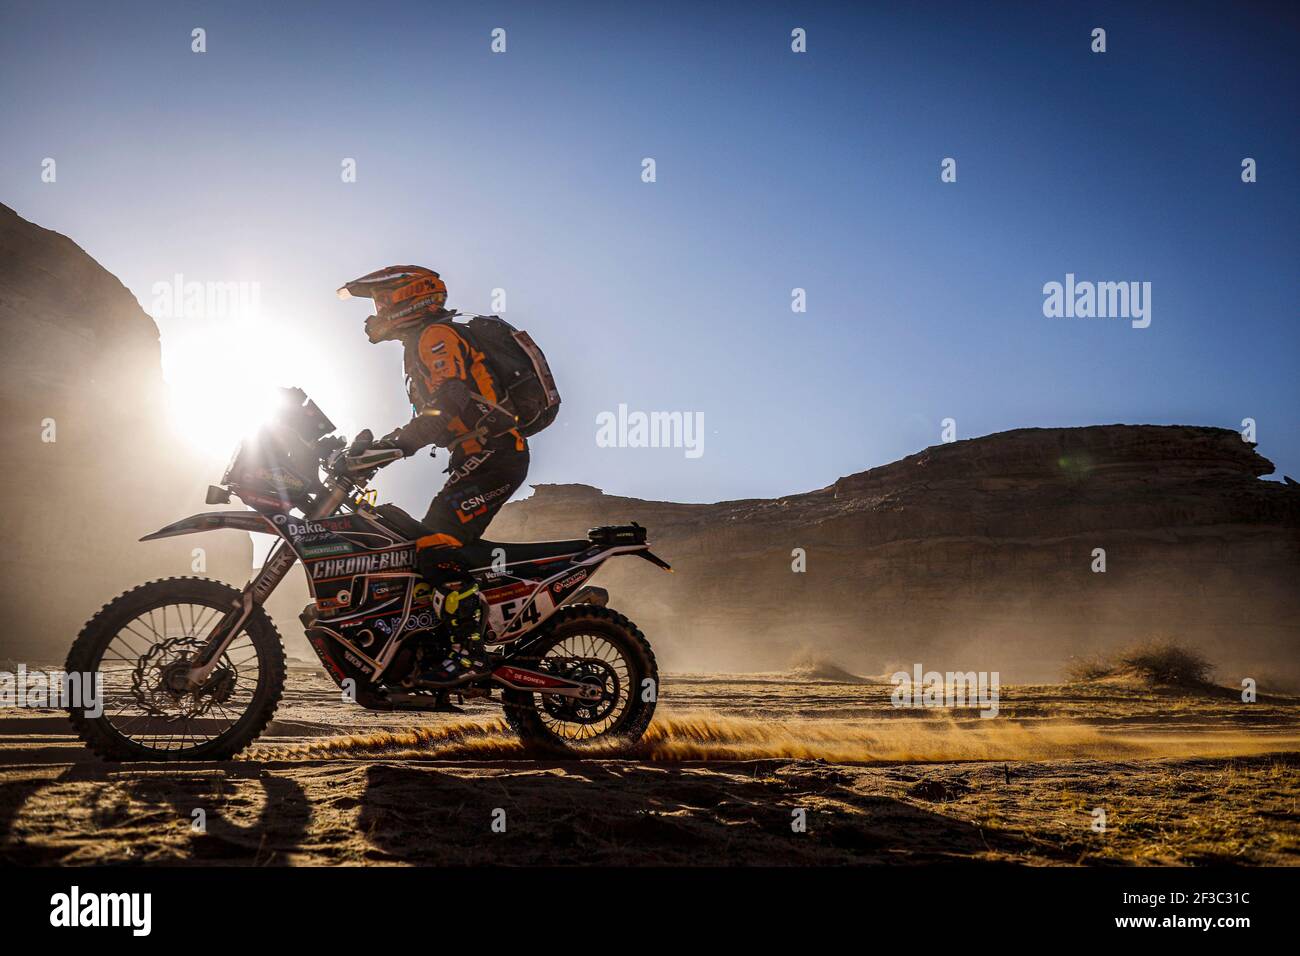 54 Pol Mirjan (nld), Husqvarna, HT Rally RAID Husqvarna Racing, Moto, Bike, Motul, azione durante la fase 5 della Dakar 2020 tra al Ula e Ha'il, 563 km - SS 353 km, in Arabia Saudita, il 9 gennaio 2020 - Foto Frédéric le Floc'h / DPI Foto Stock